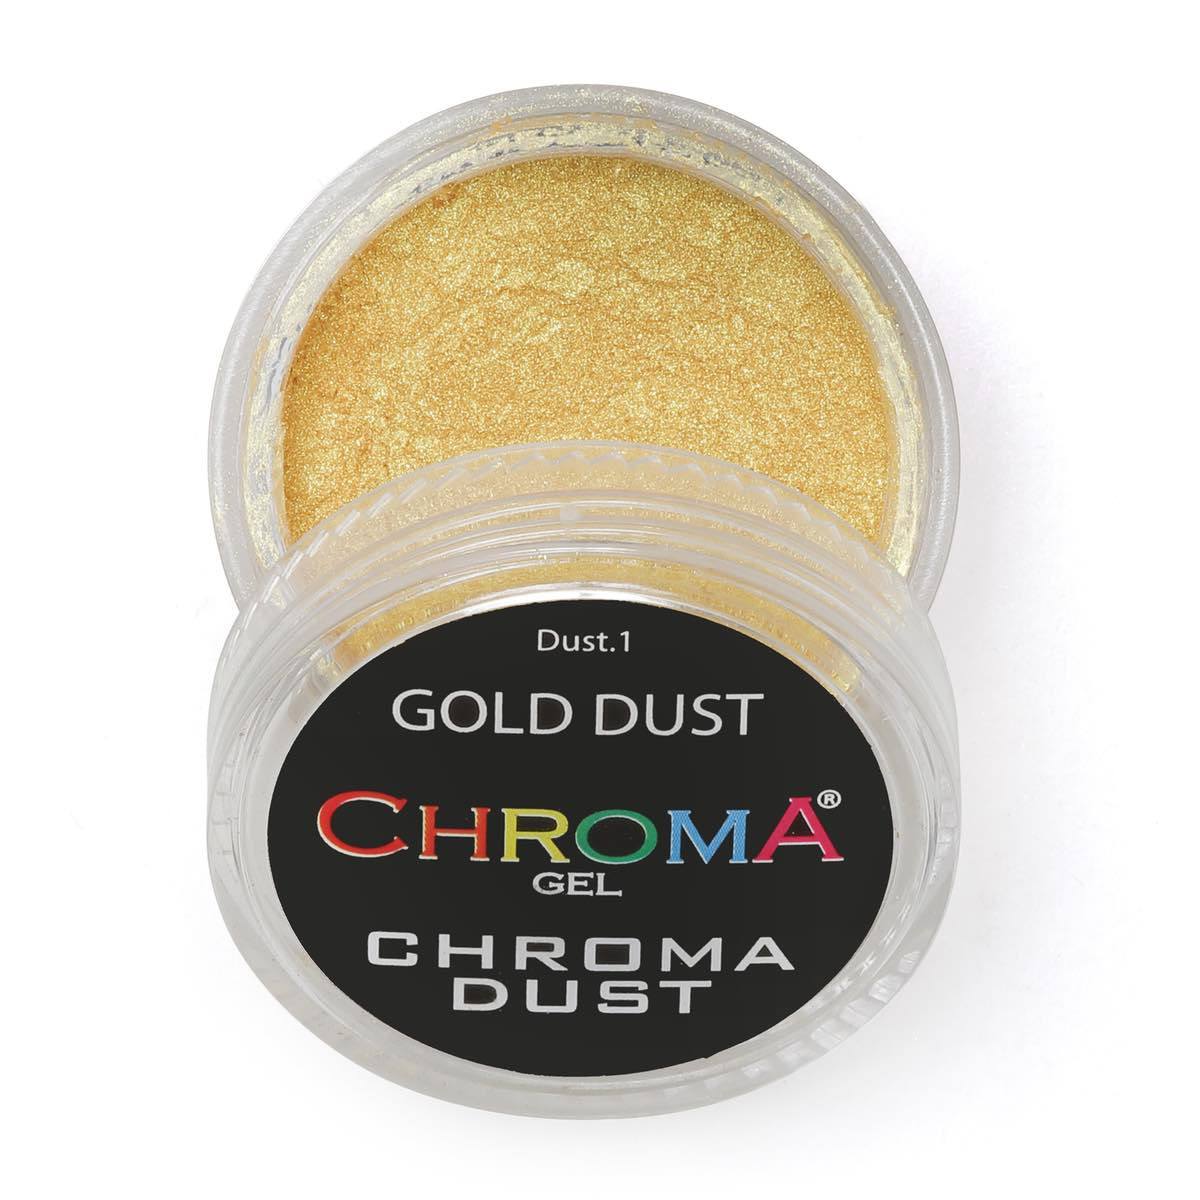 Chroma Dust No.1 Gold Dust Chrome Powder - Mirror Nails 2g - CG - Chroma Gel